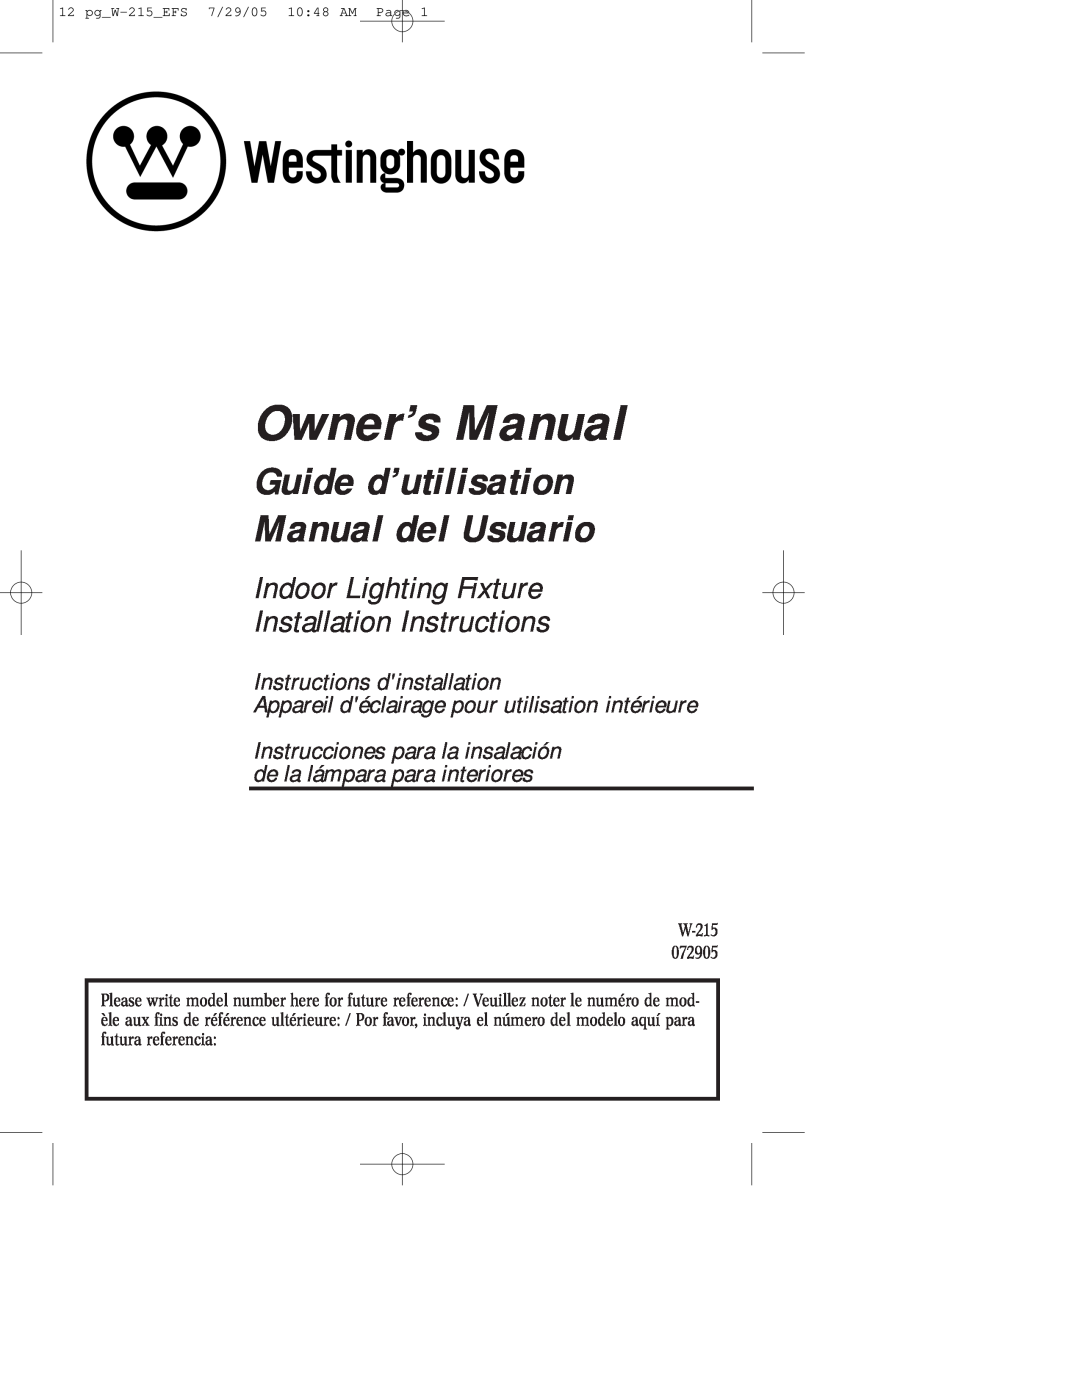 Westinghouse W-215 owner manual Guide d’utilisation Manual del Usuario, Indoor Lighting Fixture Installation Instructions 